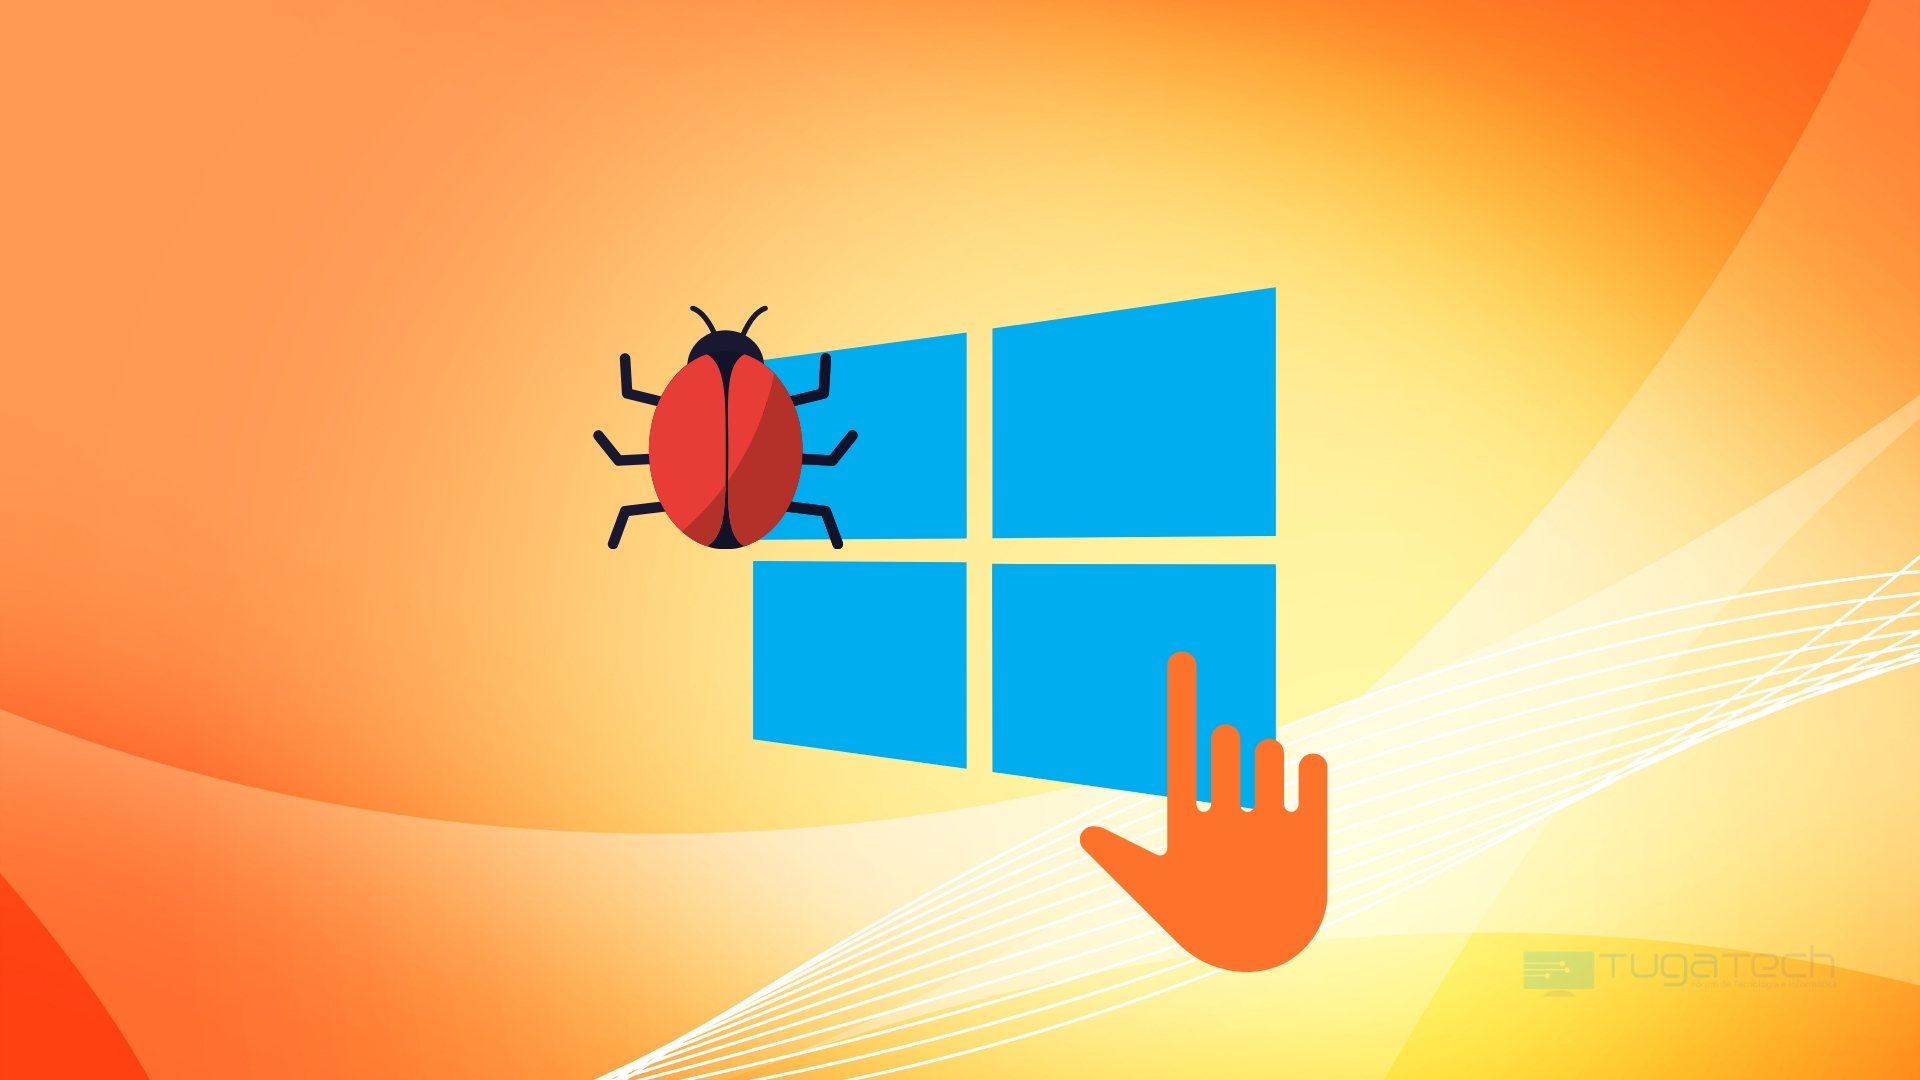 Microsoft windows malware